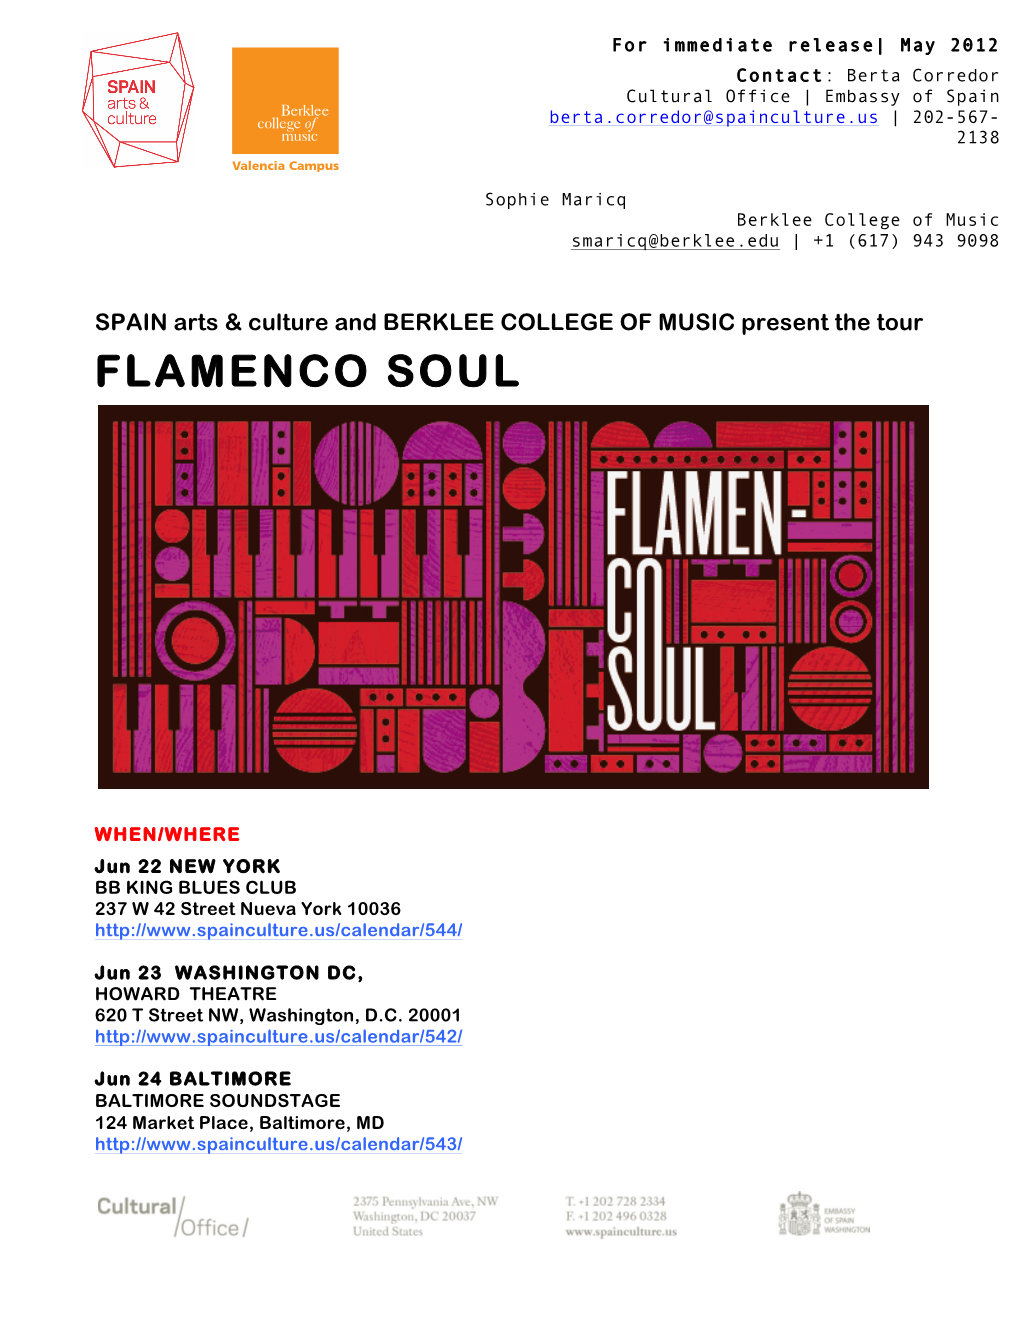 Flamenco Soul